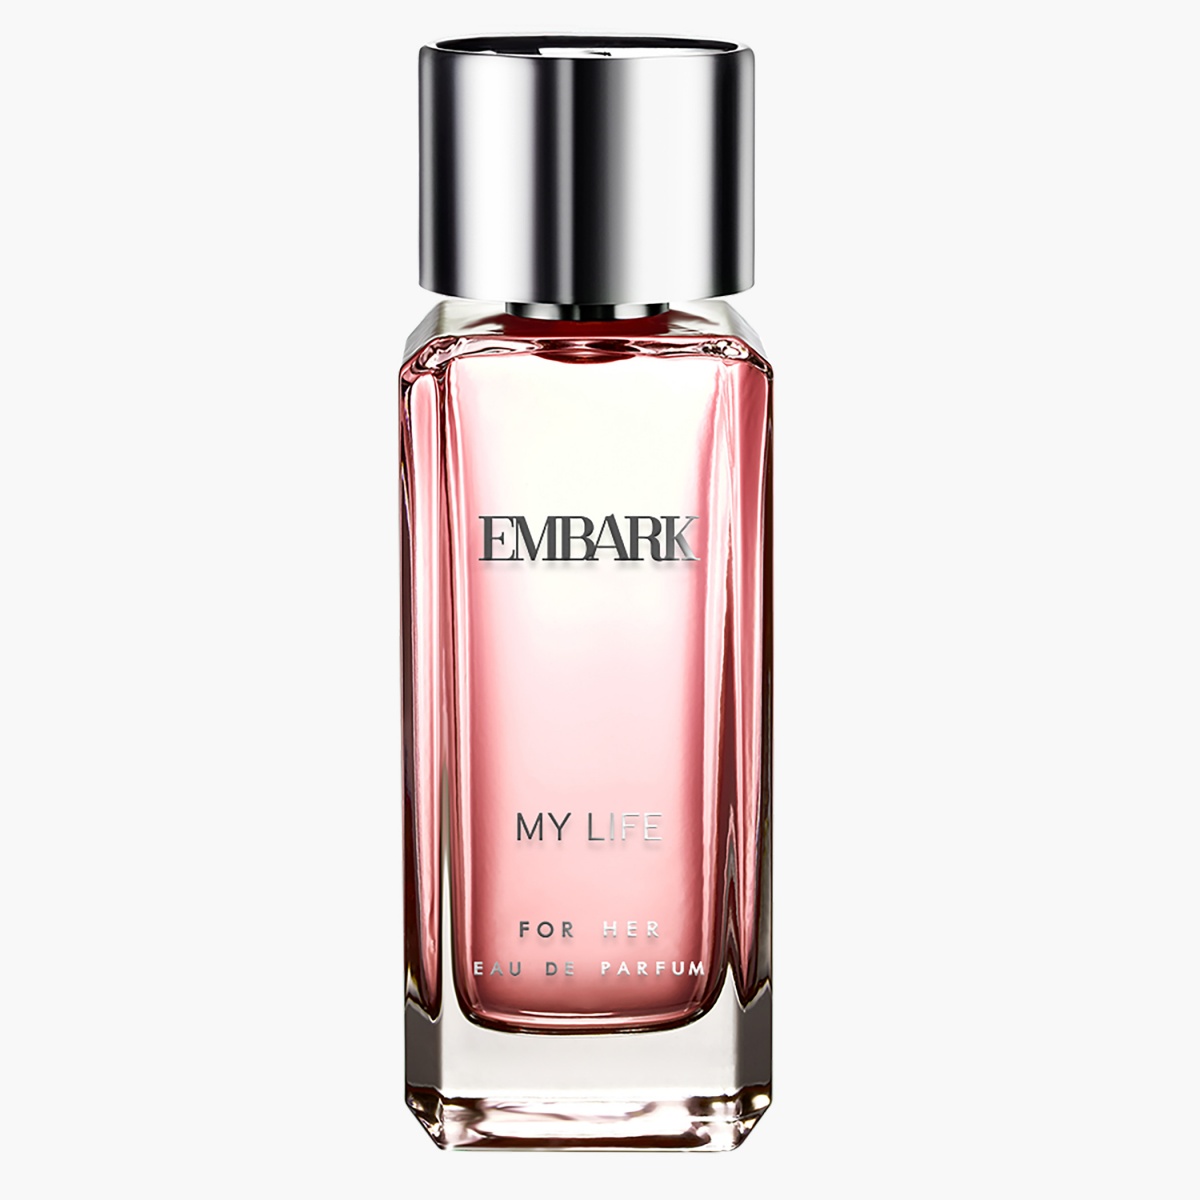 EMBARK My Life For Her Eau De Parfum- 100 ml.